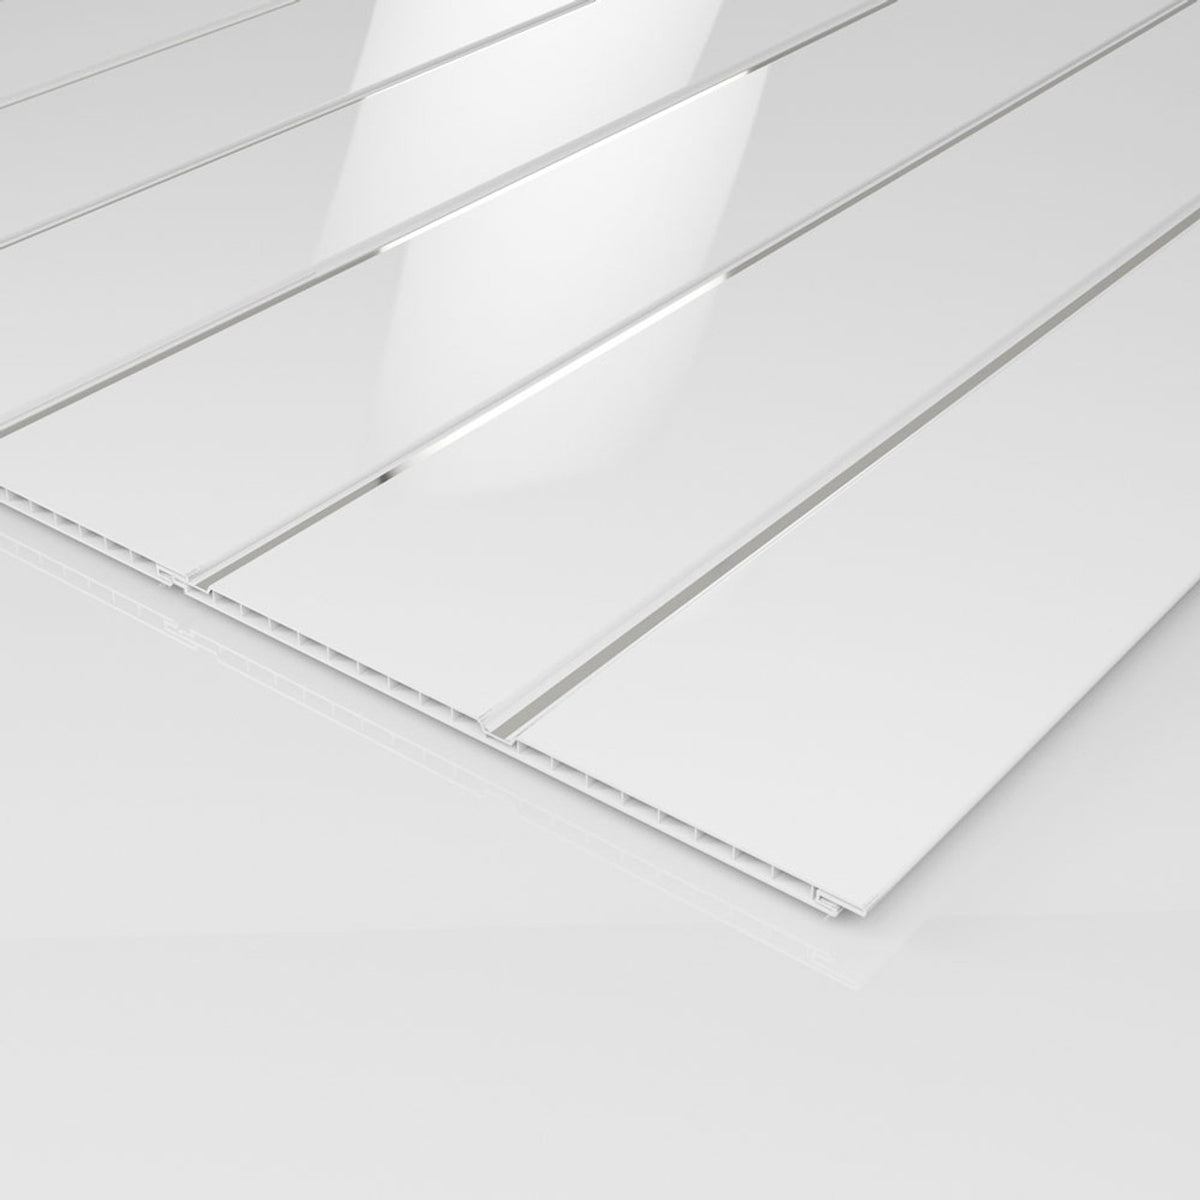 PVC Ceiling Panels - Double Chrome Gloss - 4m